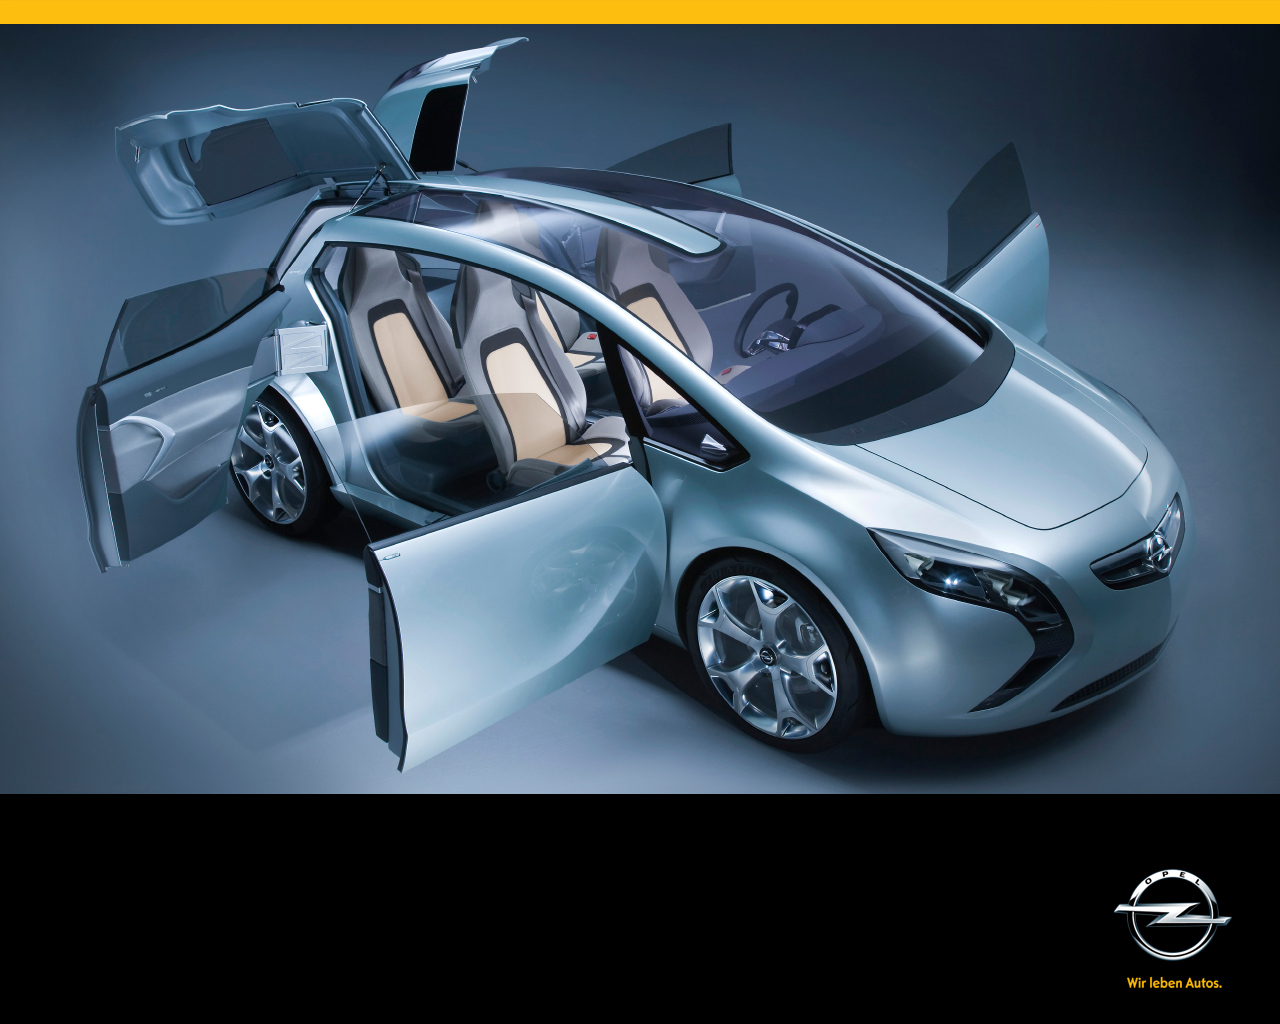 Opel Flextreme Concept Car Exterior Photos and Wallpapers